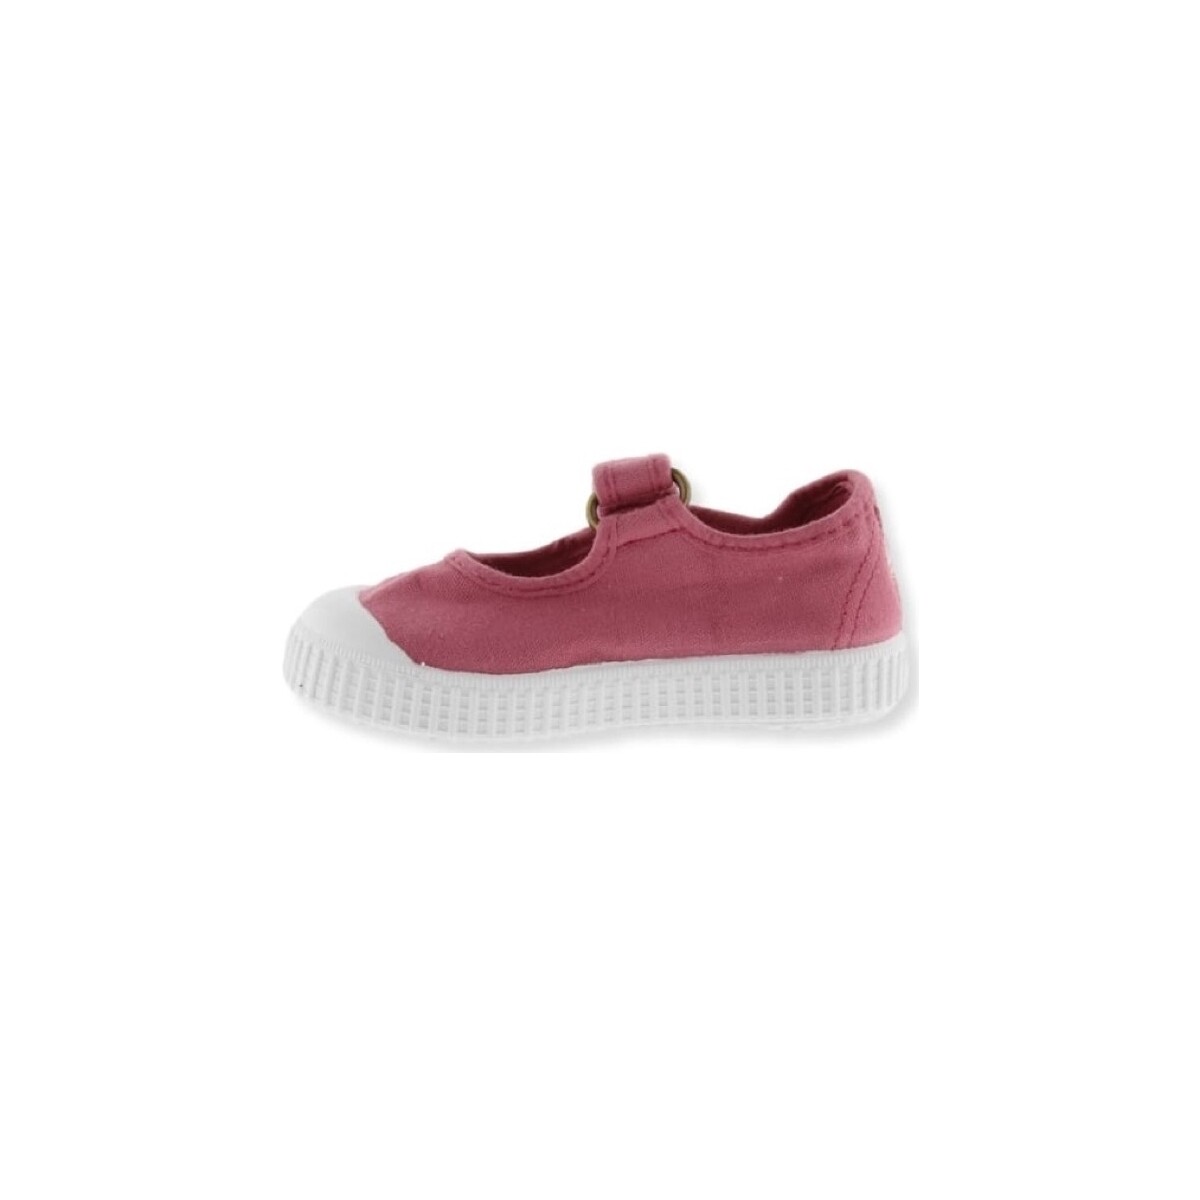 Victoria Rose Baby Shoes 36605 - Framboesa zIdkdT6g